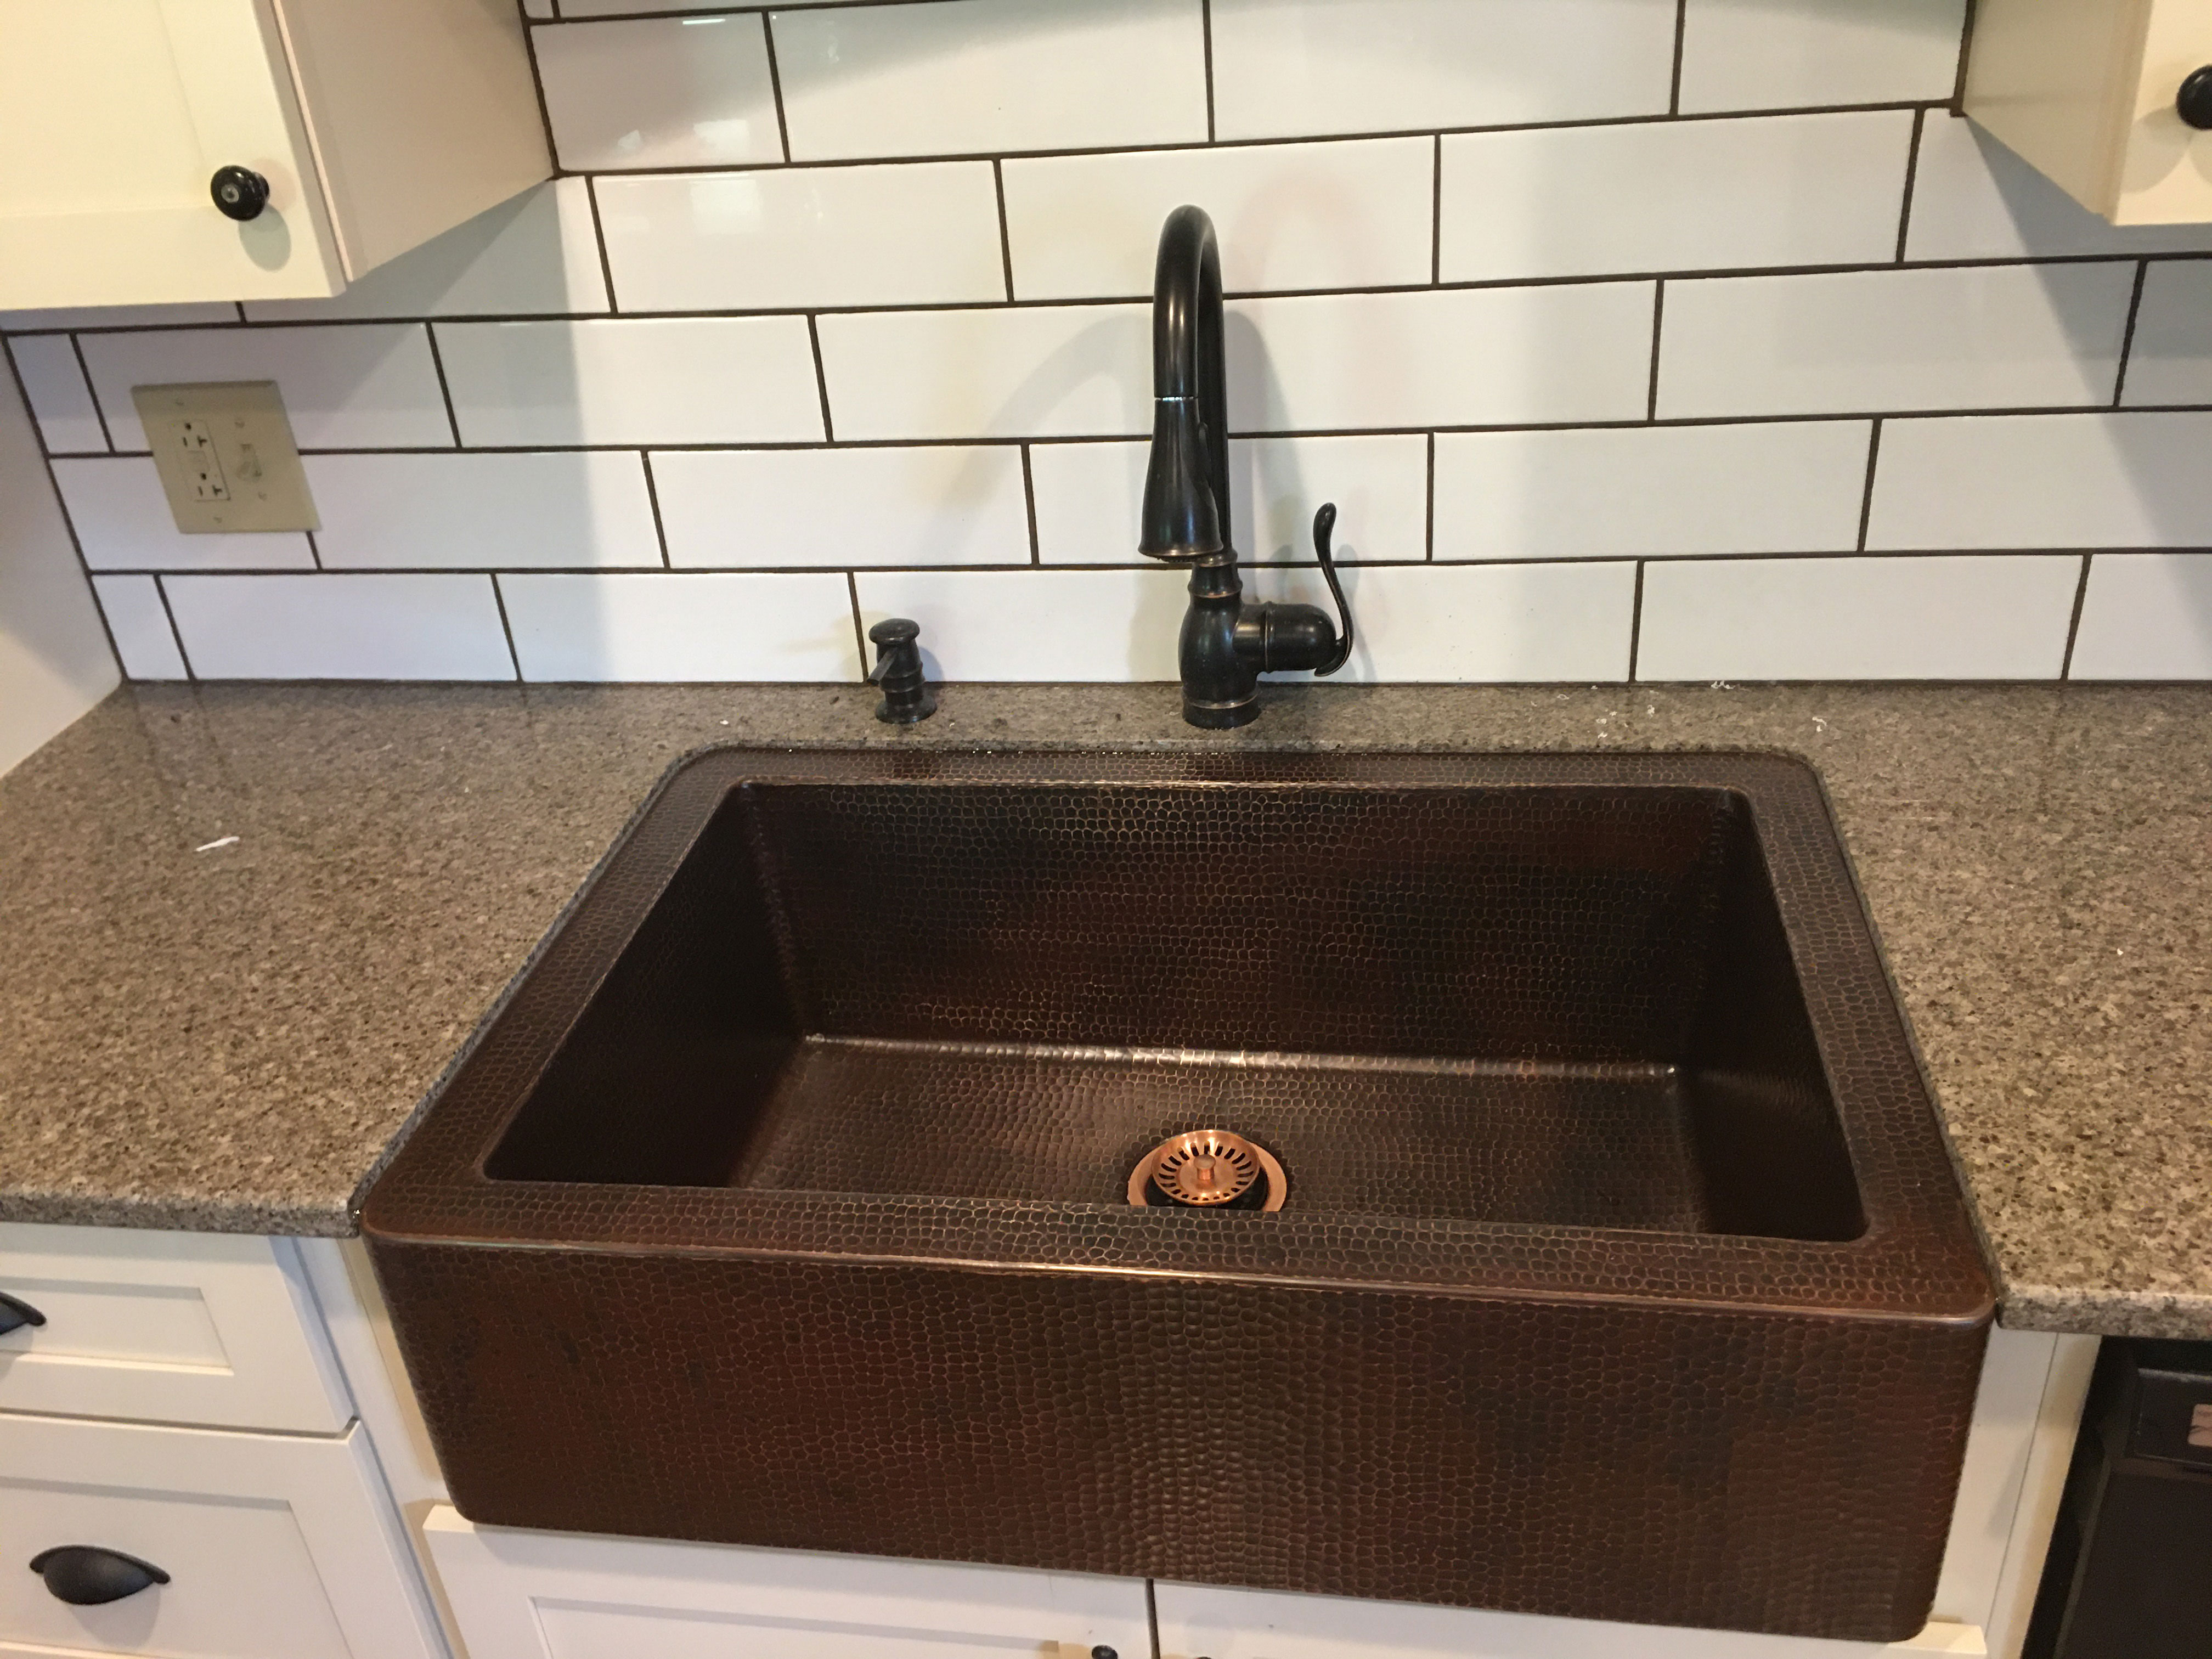 Beautiful kitchen design idea including kitchen sink idea, white cabinets, marble countertops and brick backsplash